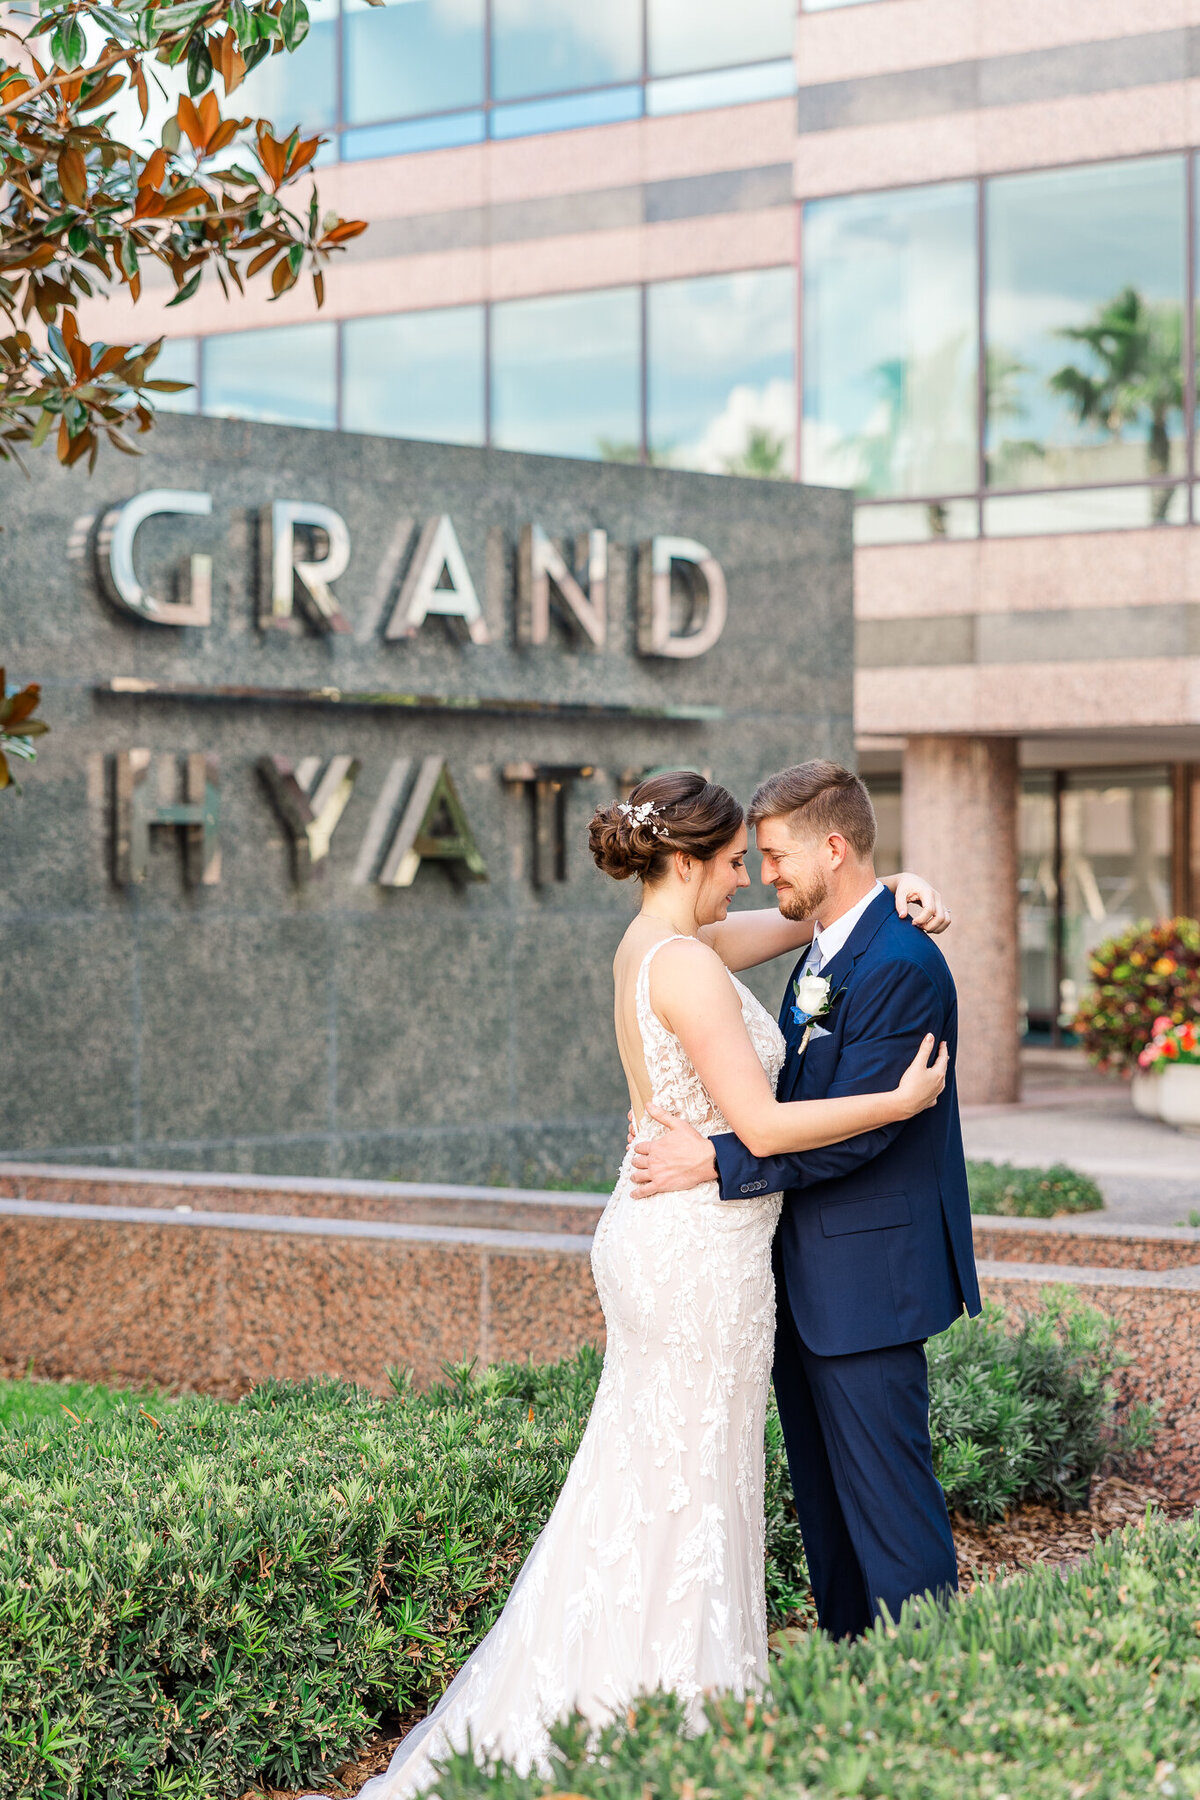 Grand-Hyatt-Tampa-Bay-Wedding-Karisa-Denae-Photography-204